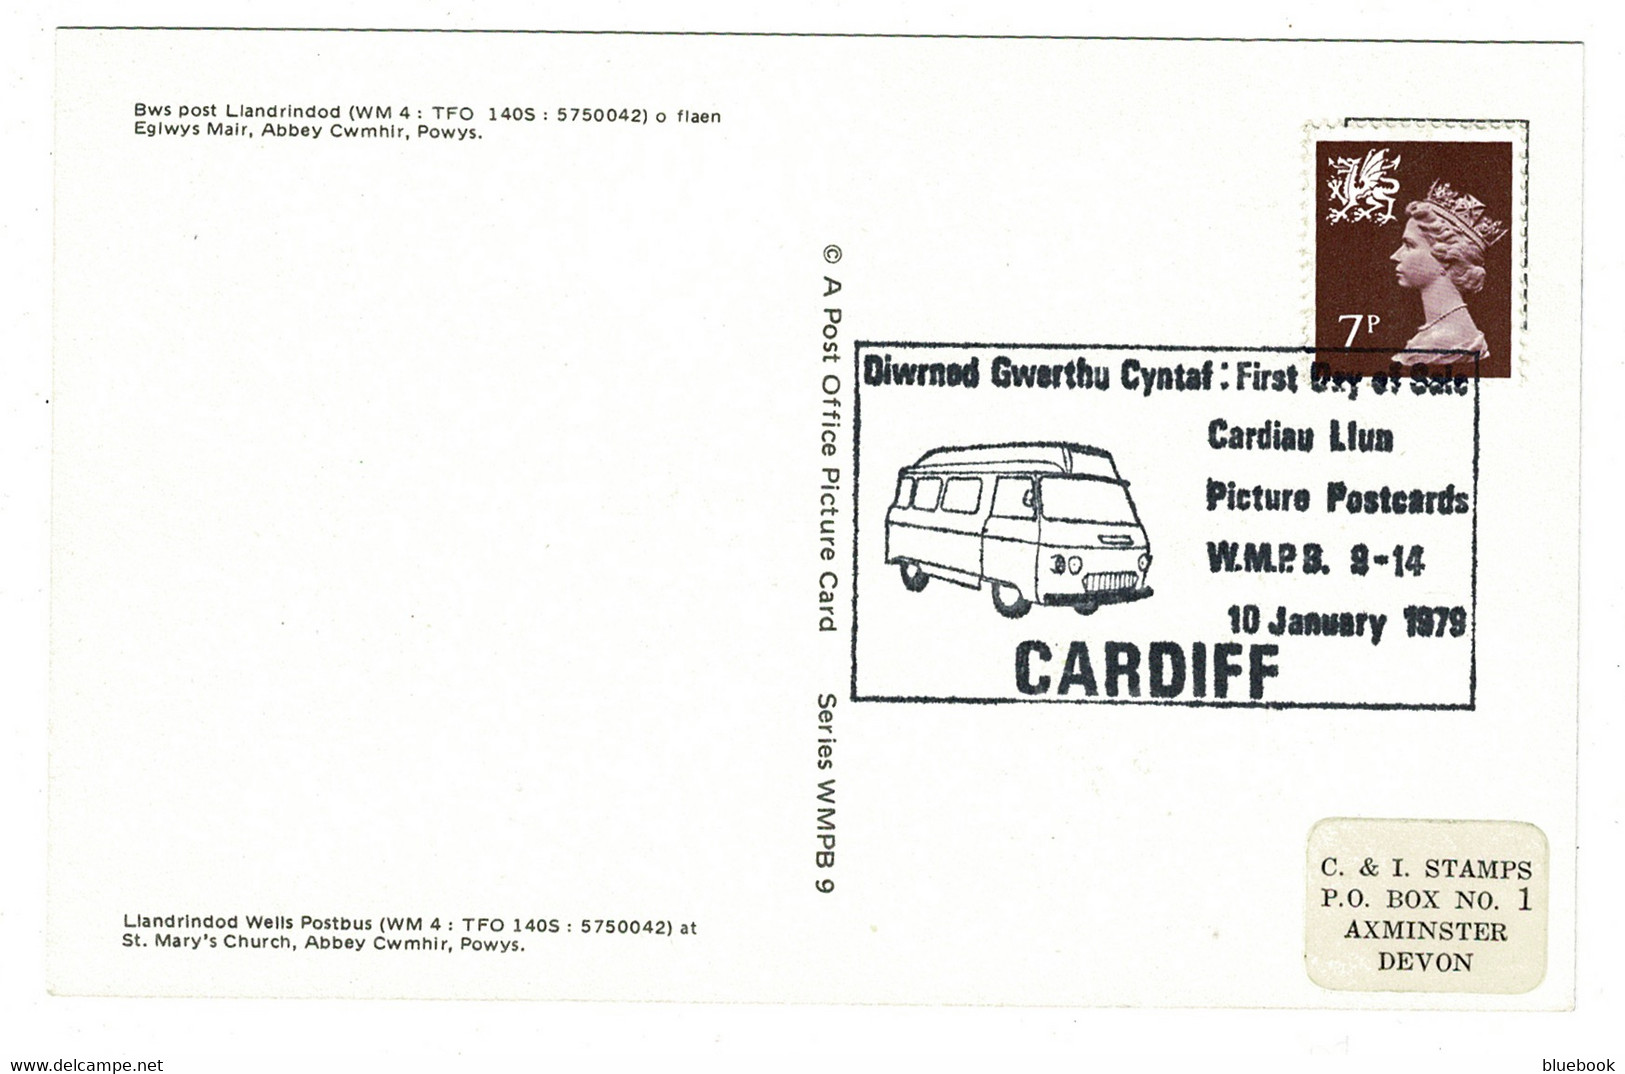 Ref 1398 - 1979 Post Office Postbus Llandrindod Wells - Special Cancel Postmark For Cardiff - Radnorshire